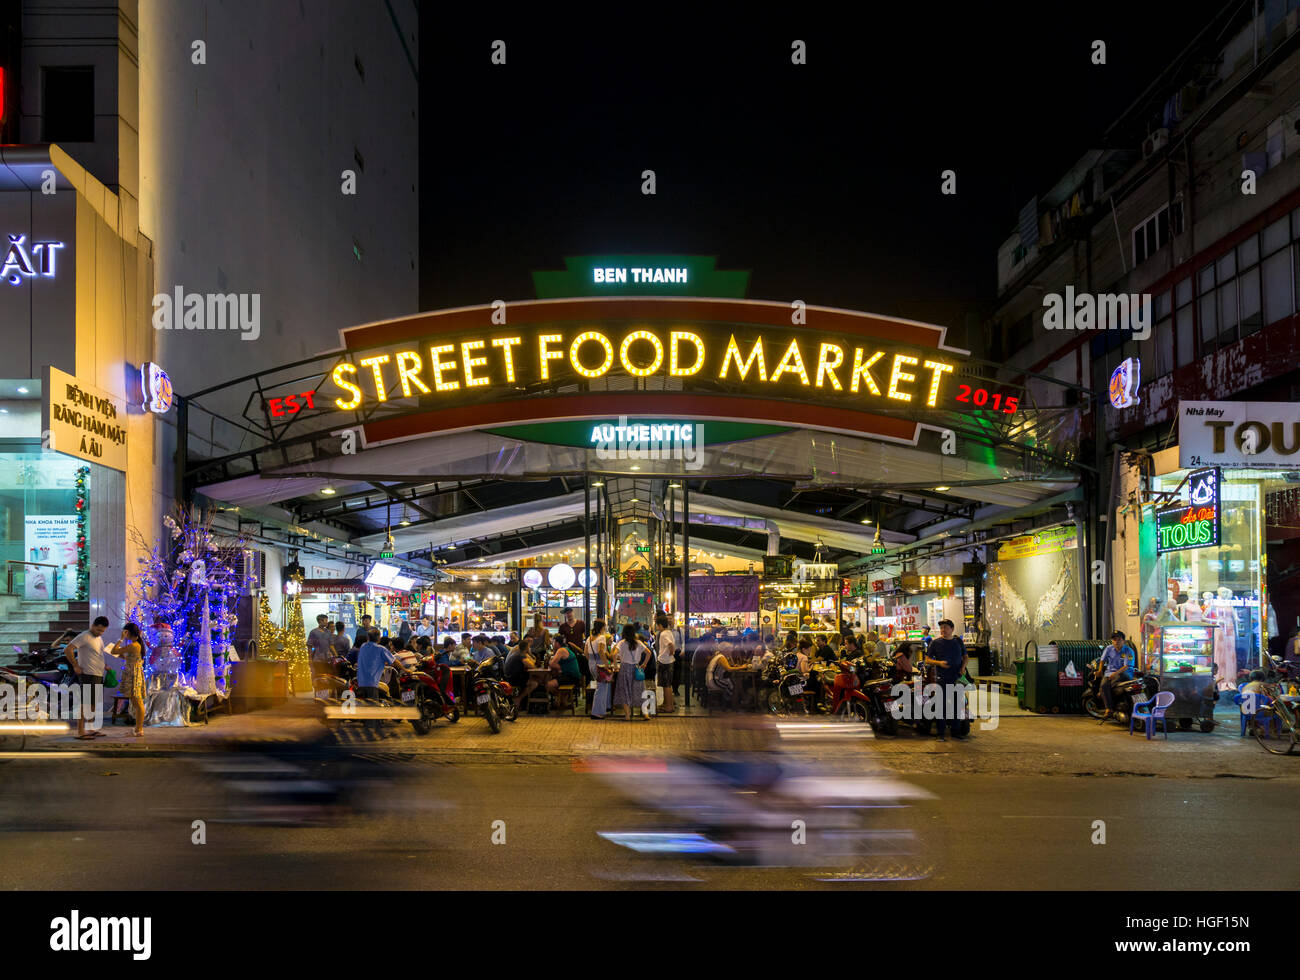 Ben Thanh Food Market Stock Photo